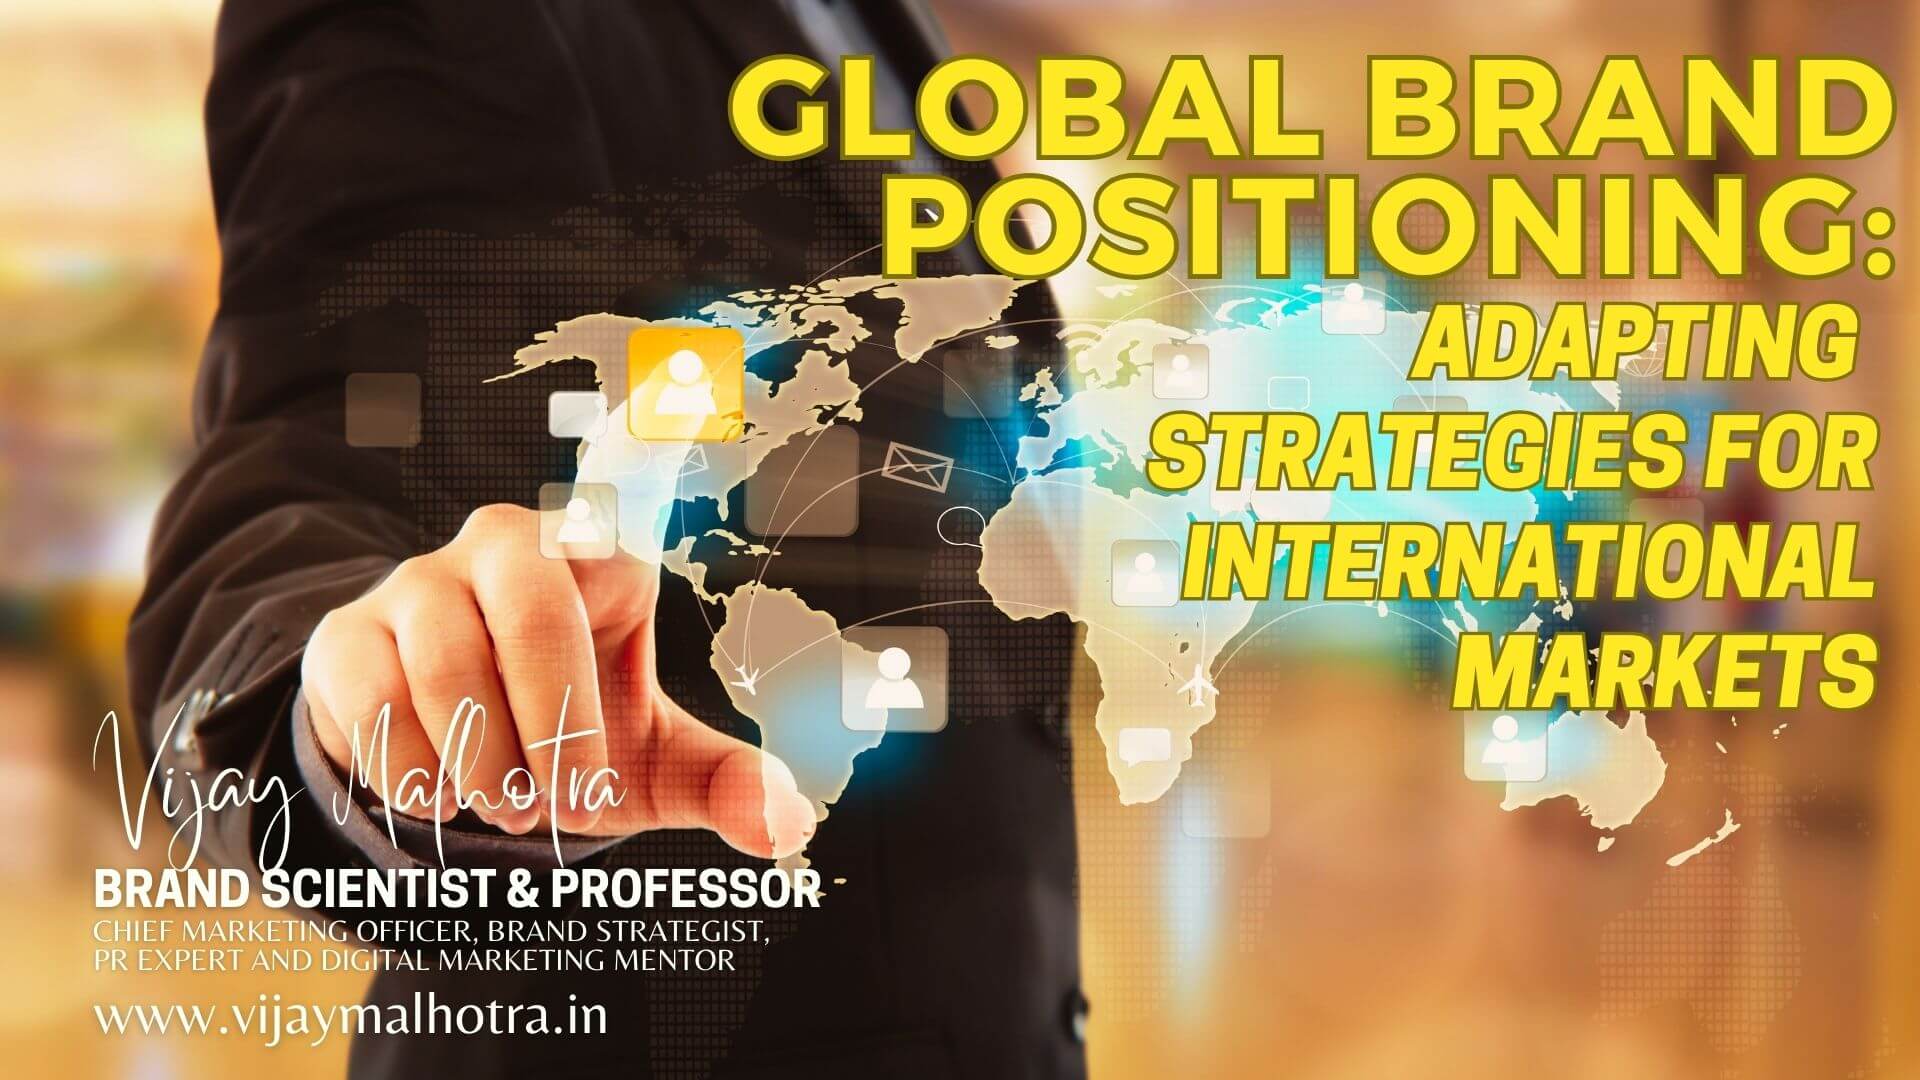 Global Brand Positioning: Adapting Strategies for International Markets by Vijay Malhotra